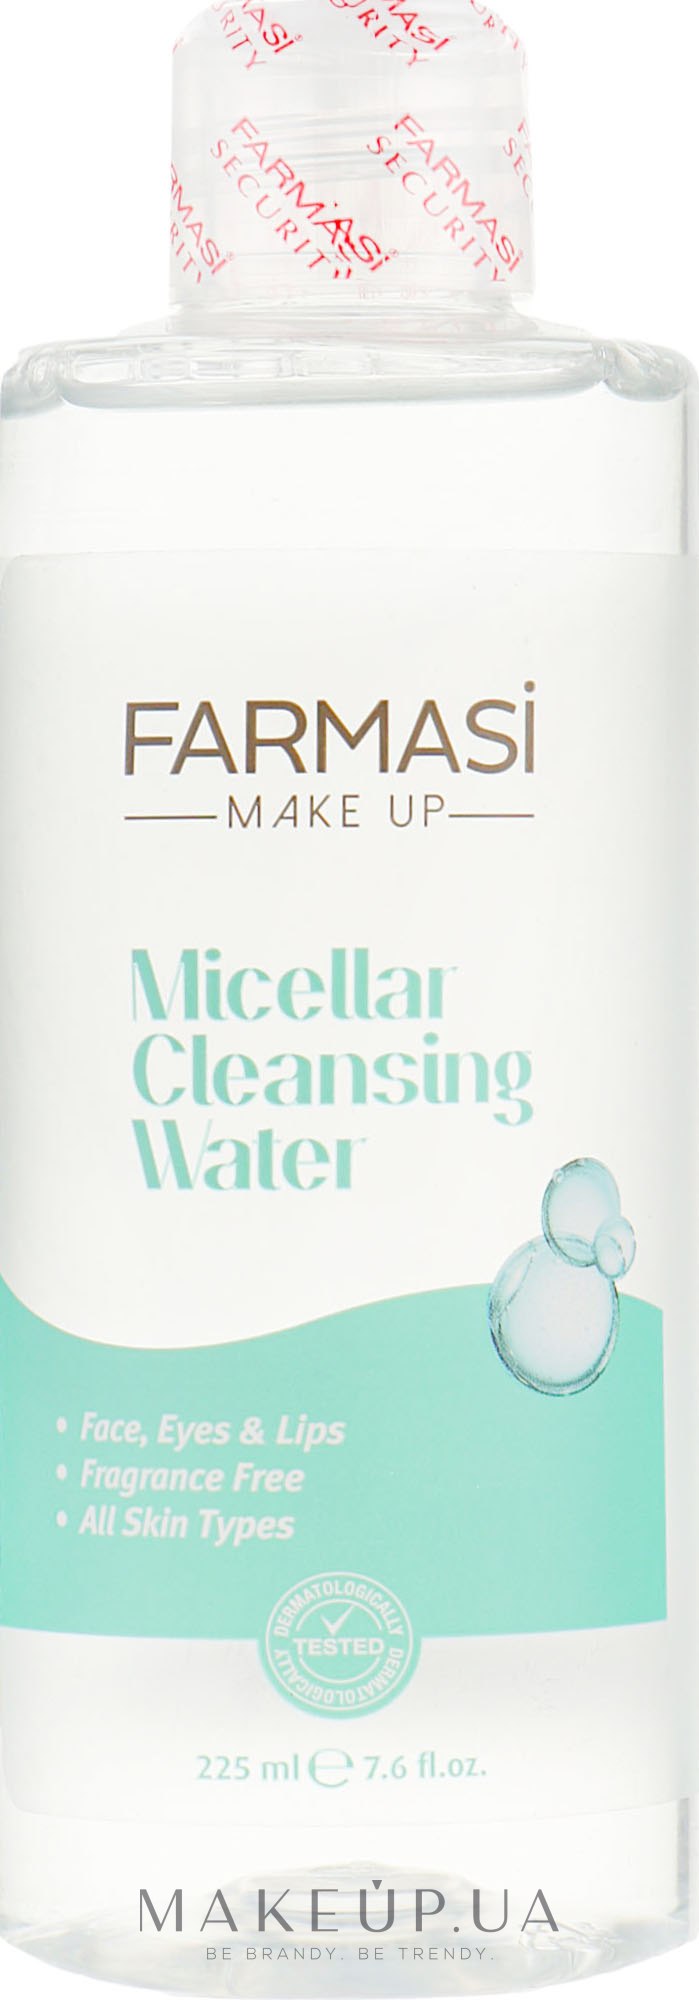 Мицеллярная очищающая вода для лица - Farmasi Micellar Cleansing Water  — фото 225ml